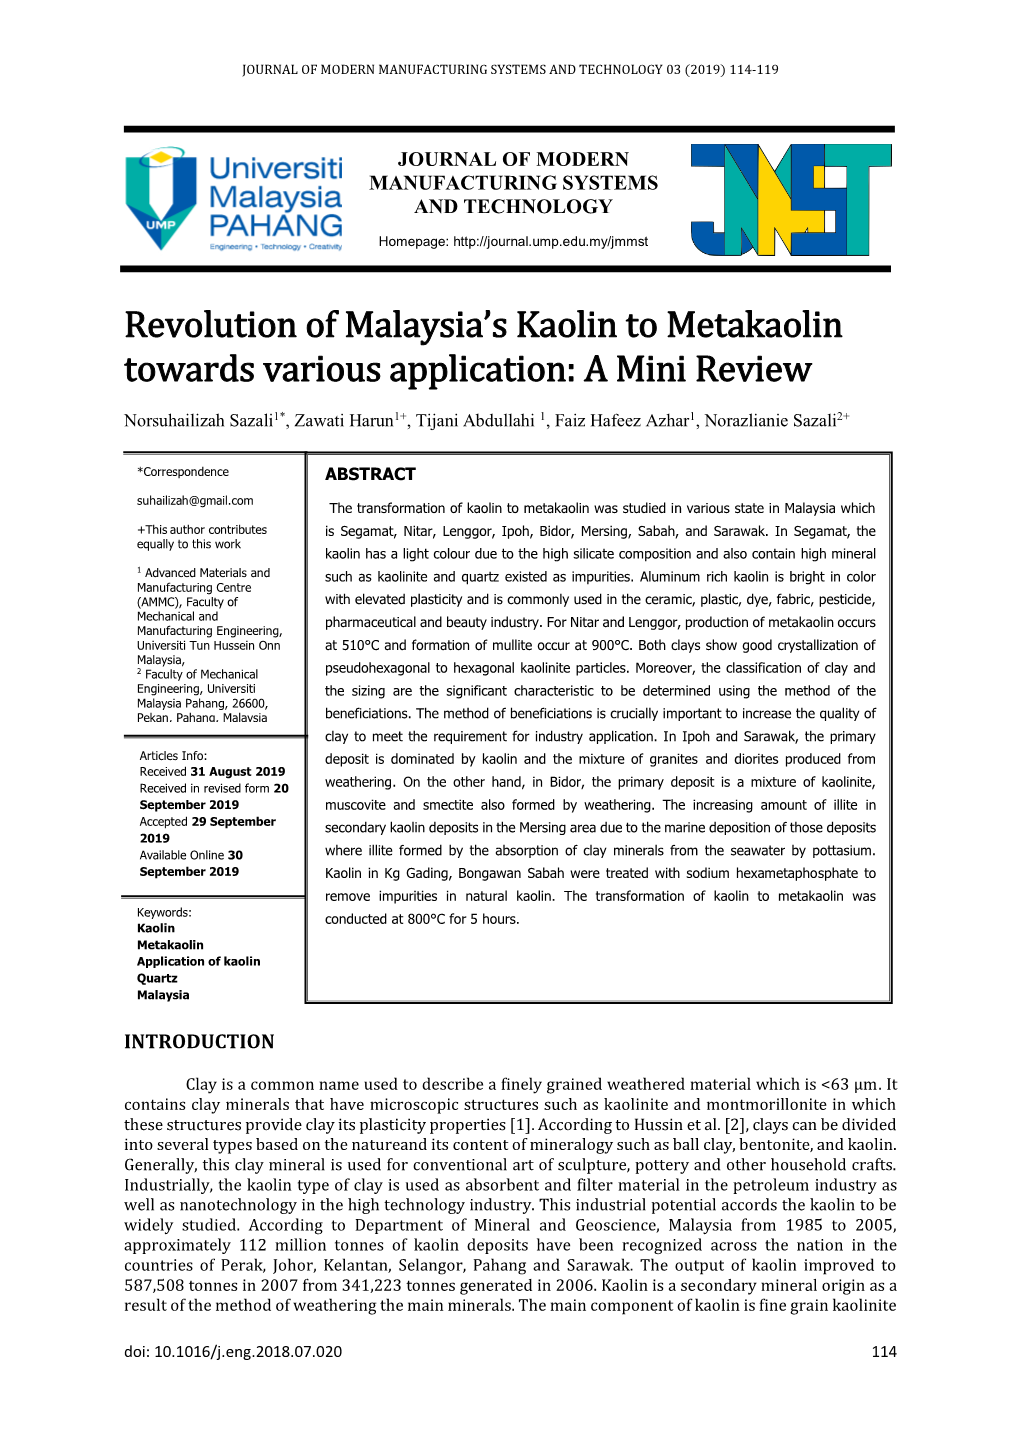 Revolution of Malaysia's Kaolin to Metakaolin Towards Various